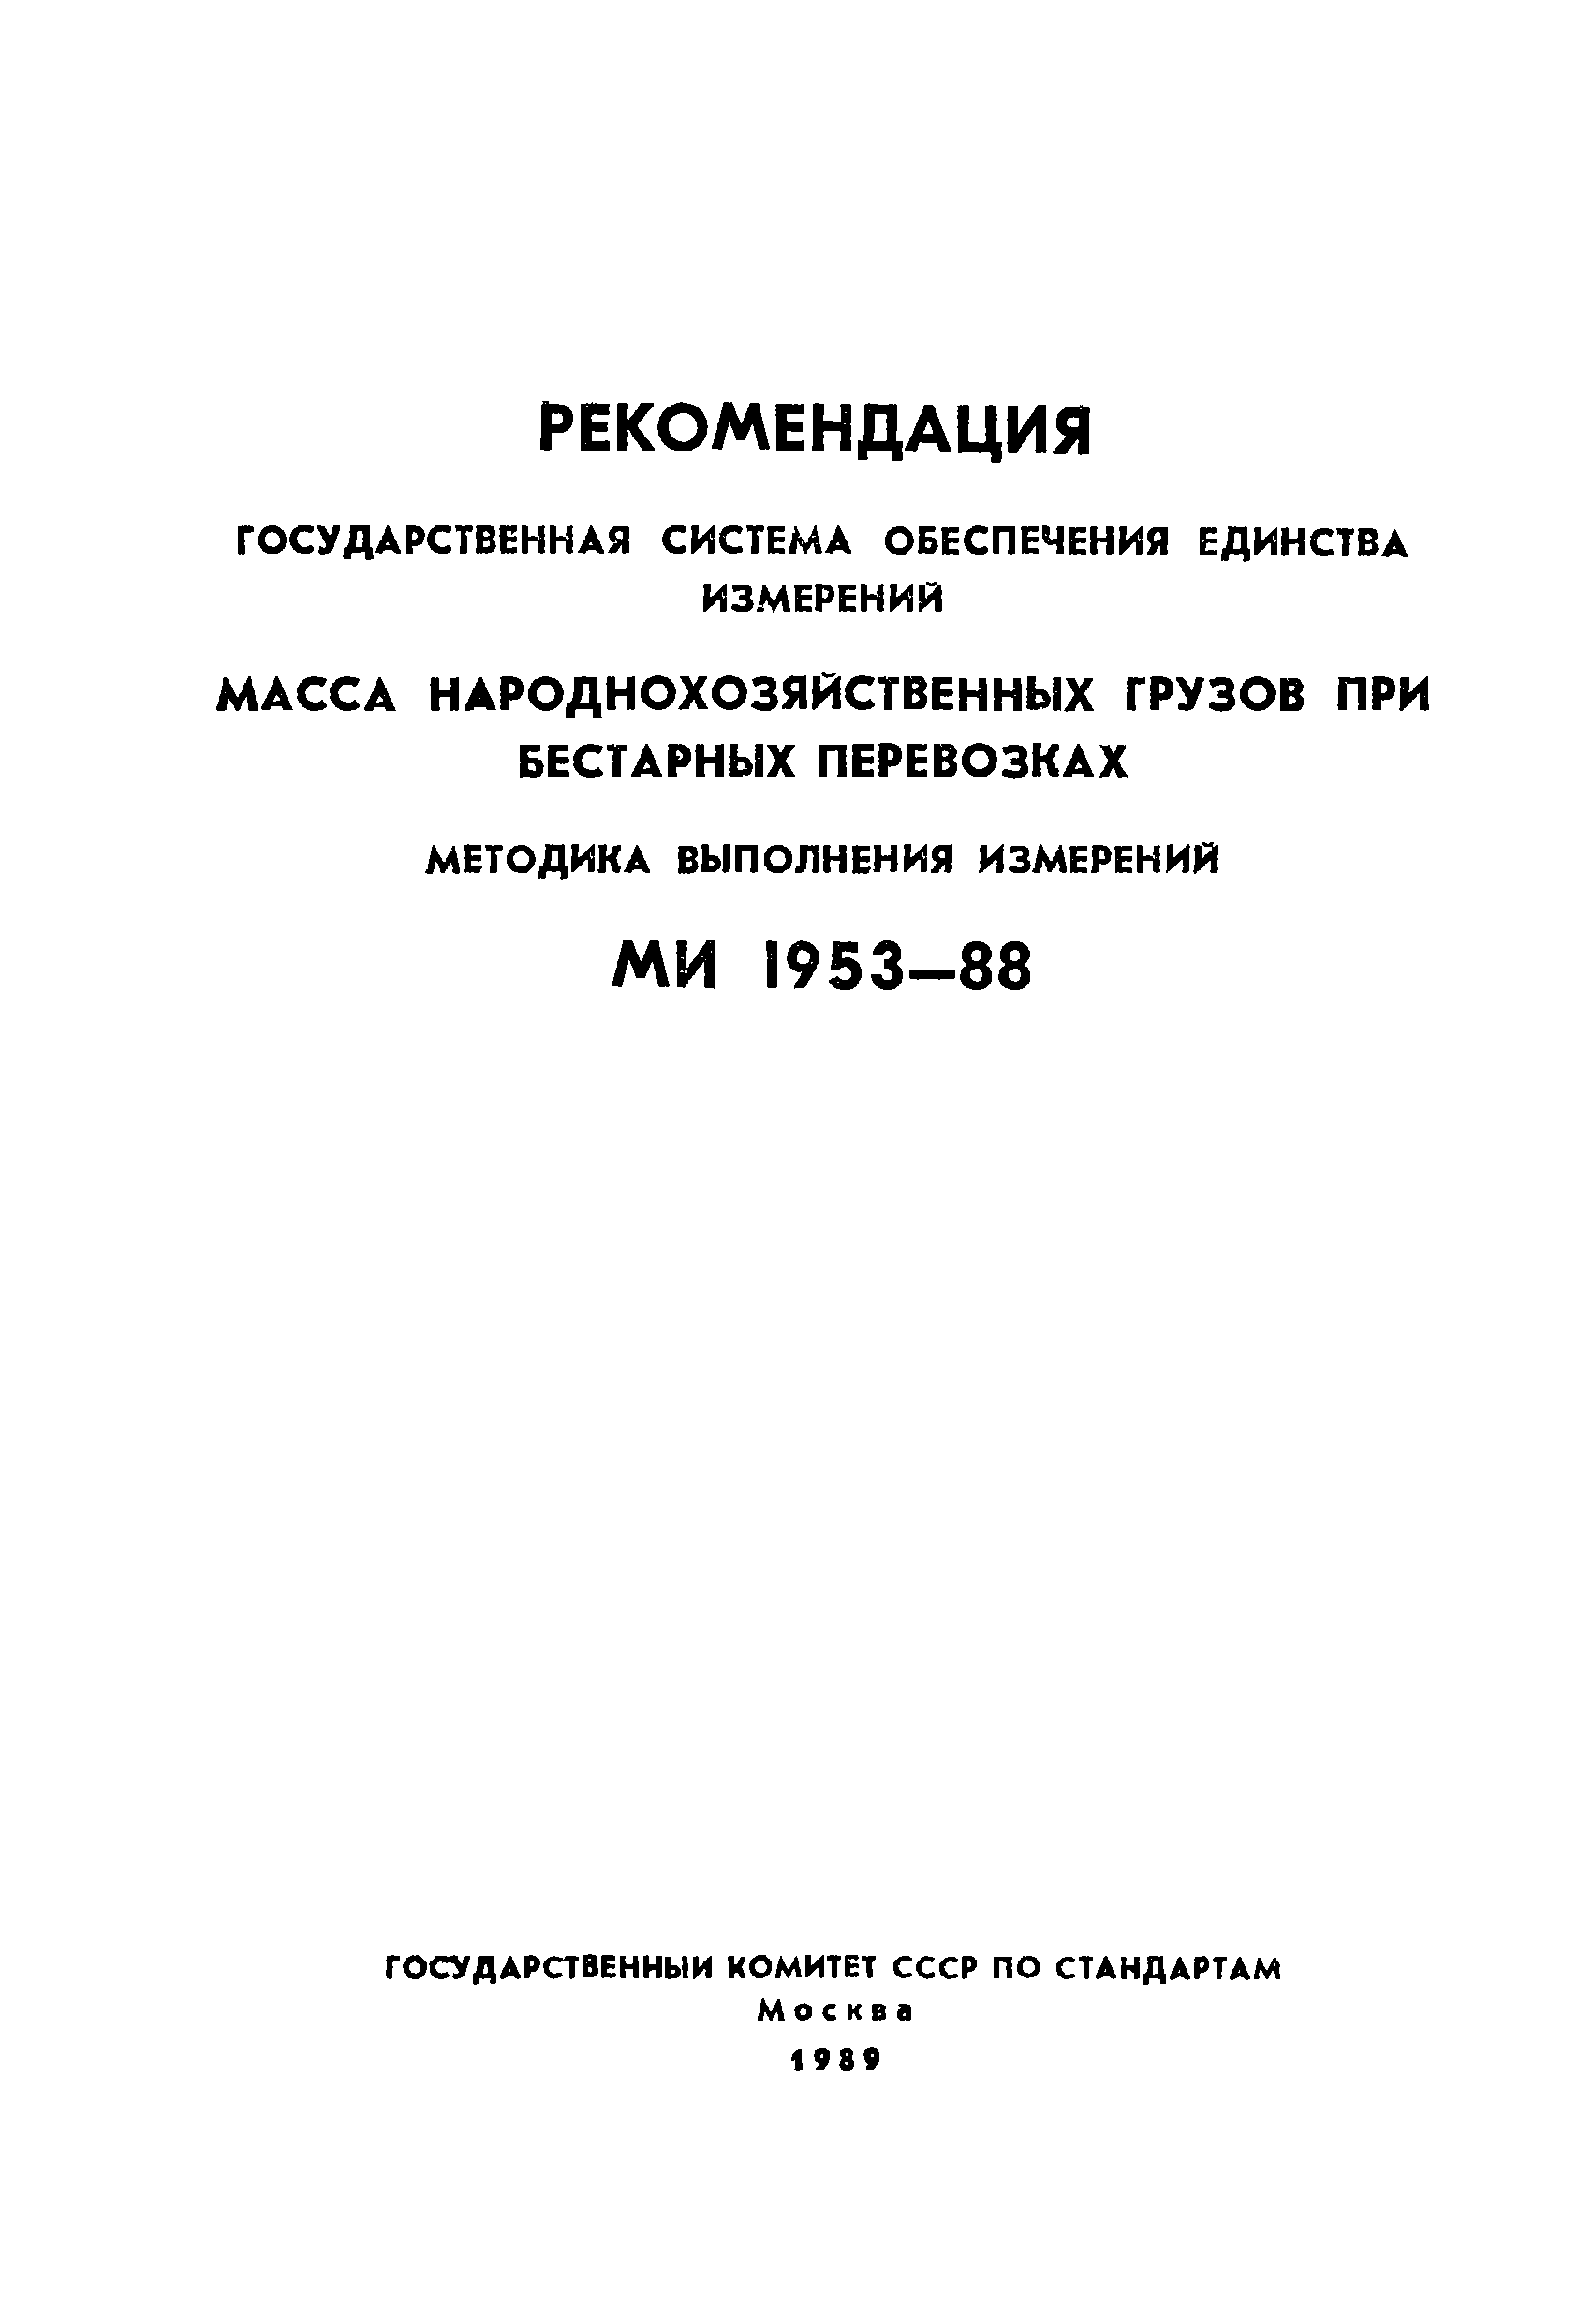 МИ 1953-88